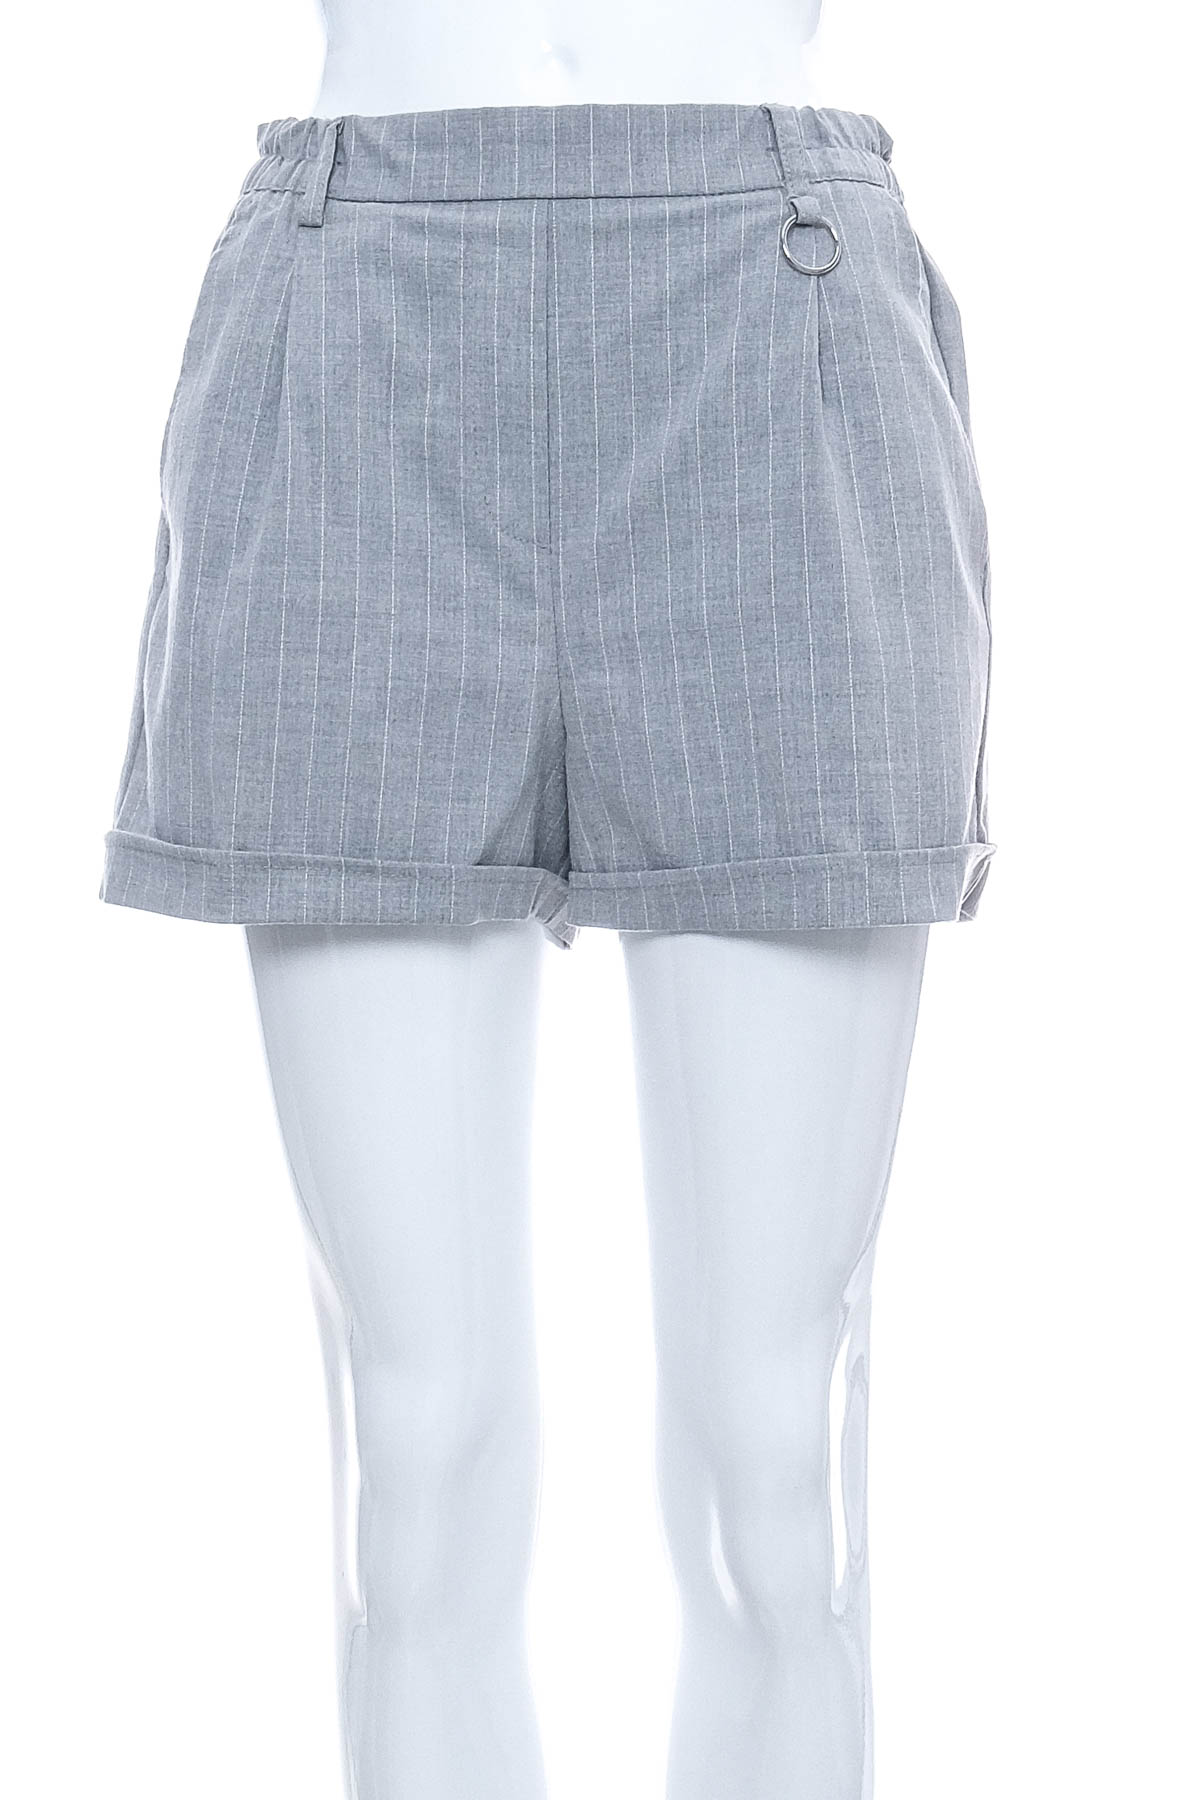 Female shorts - Bershka - 0